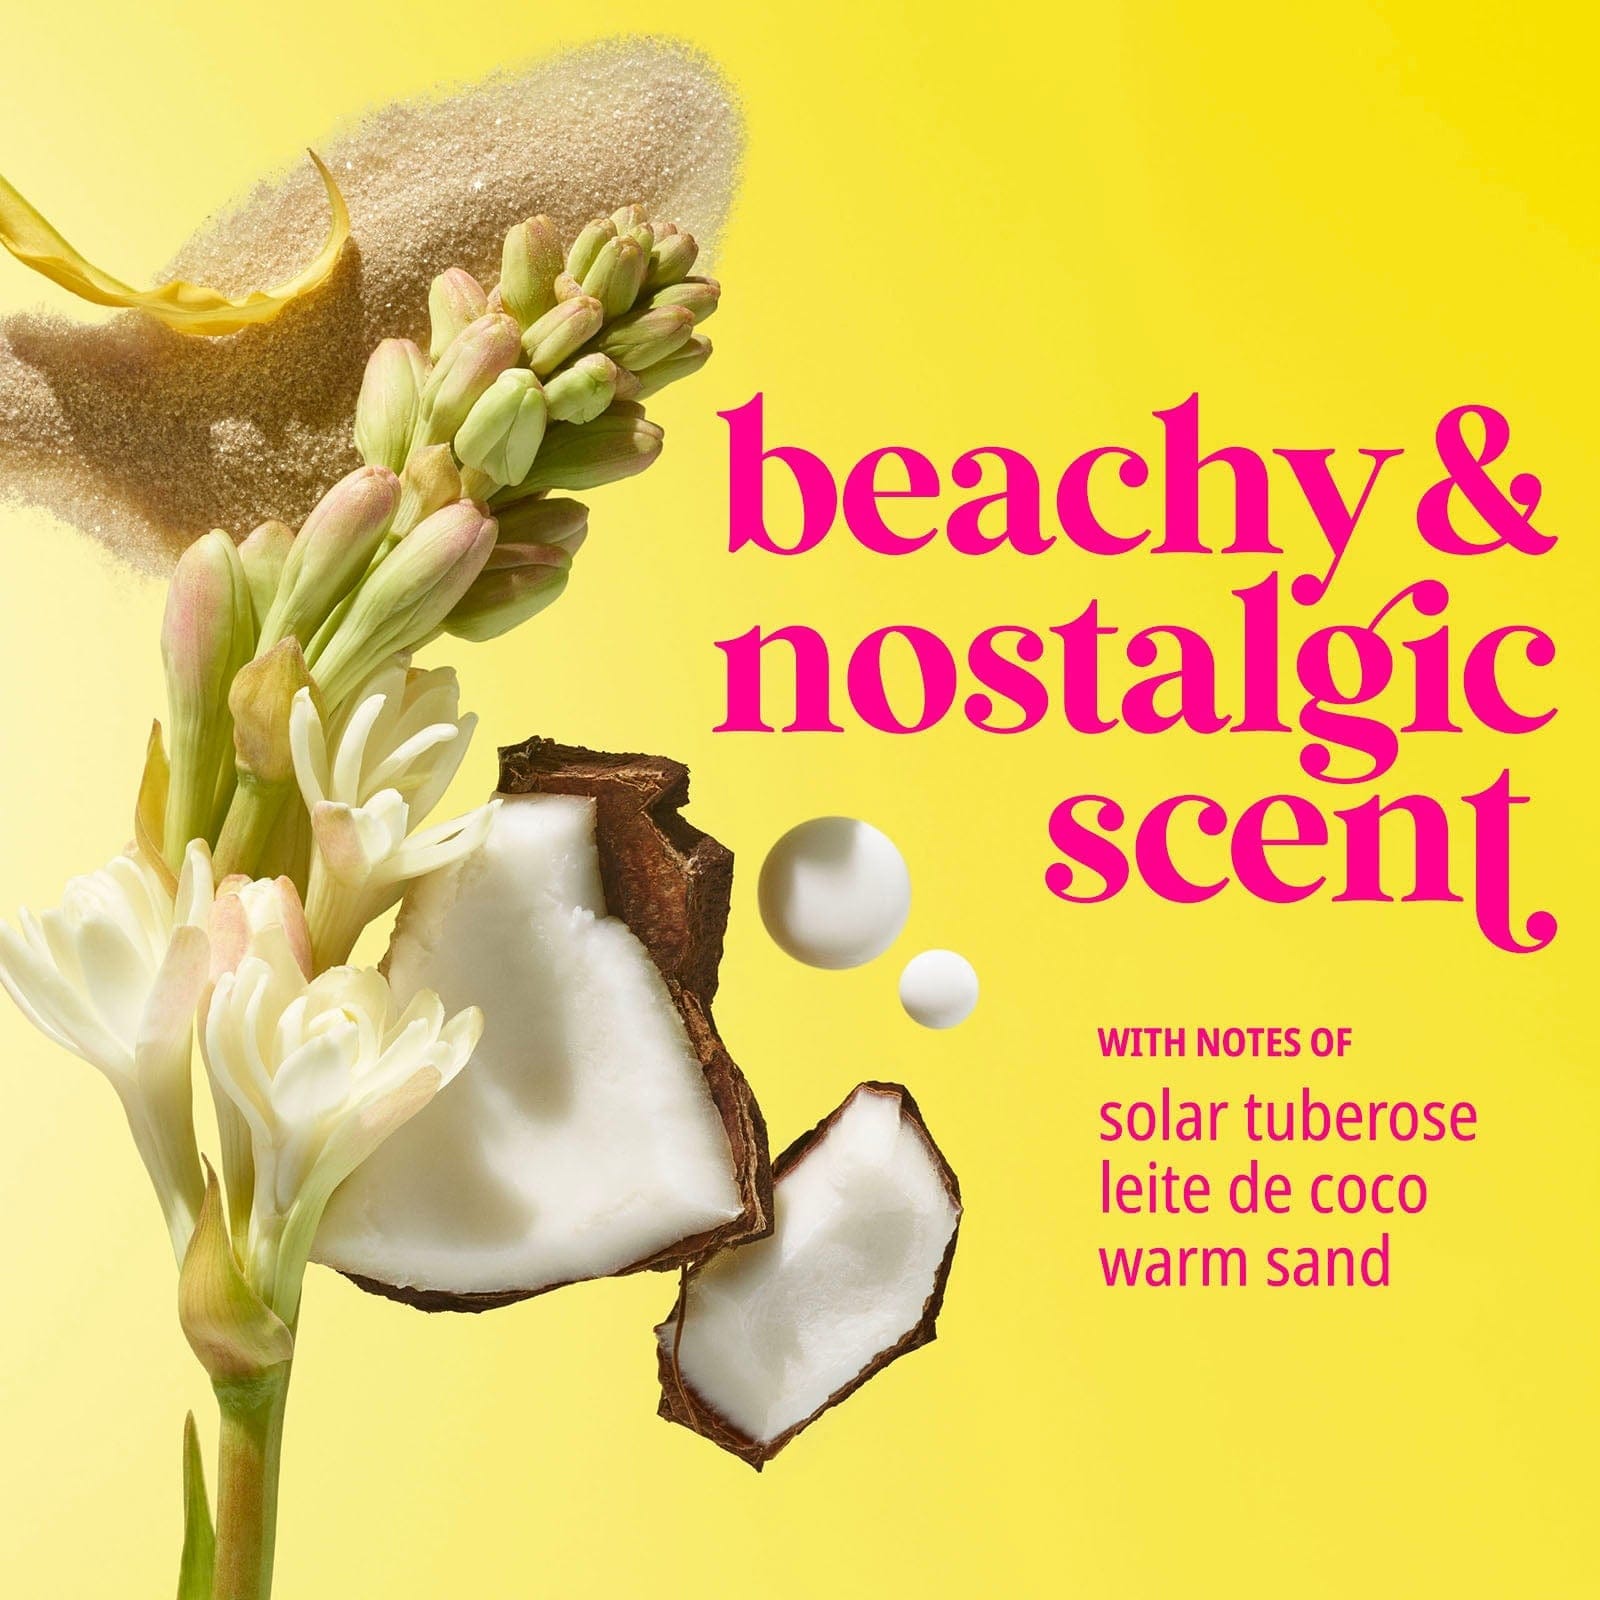 Beachy &amp; nostalgic scent - with notes of solar tuberose, leite de coco, warm sand